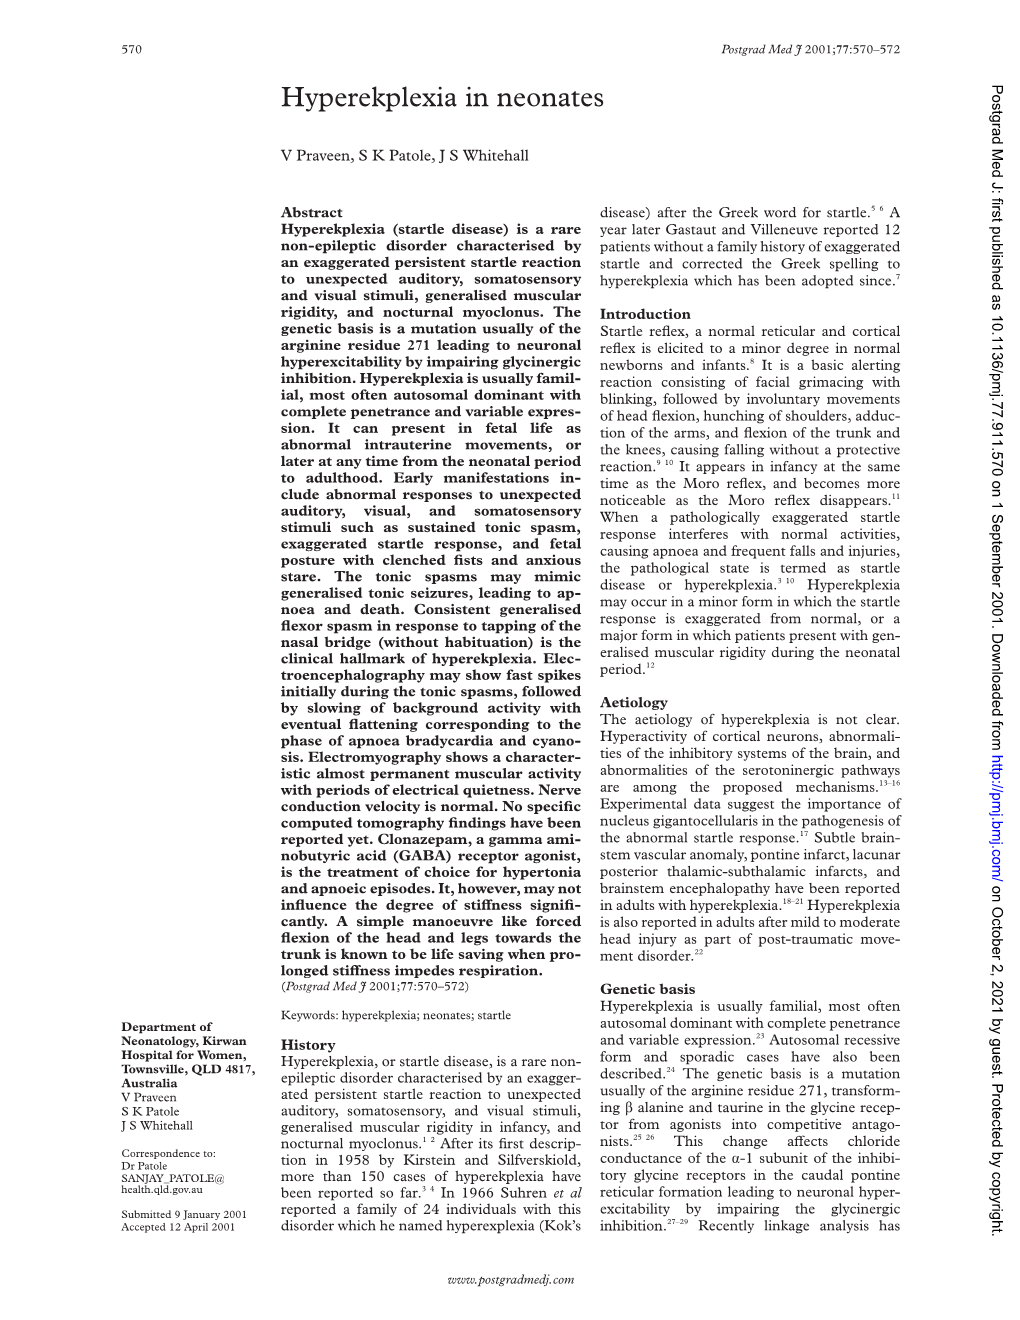 Hyperekplexia in Neonates Postgrad Med J: First Published As 10.1136/Pmj.77.911.570 on 1 September 2001